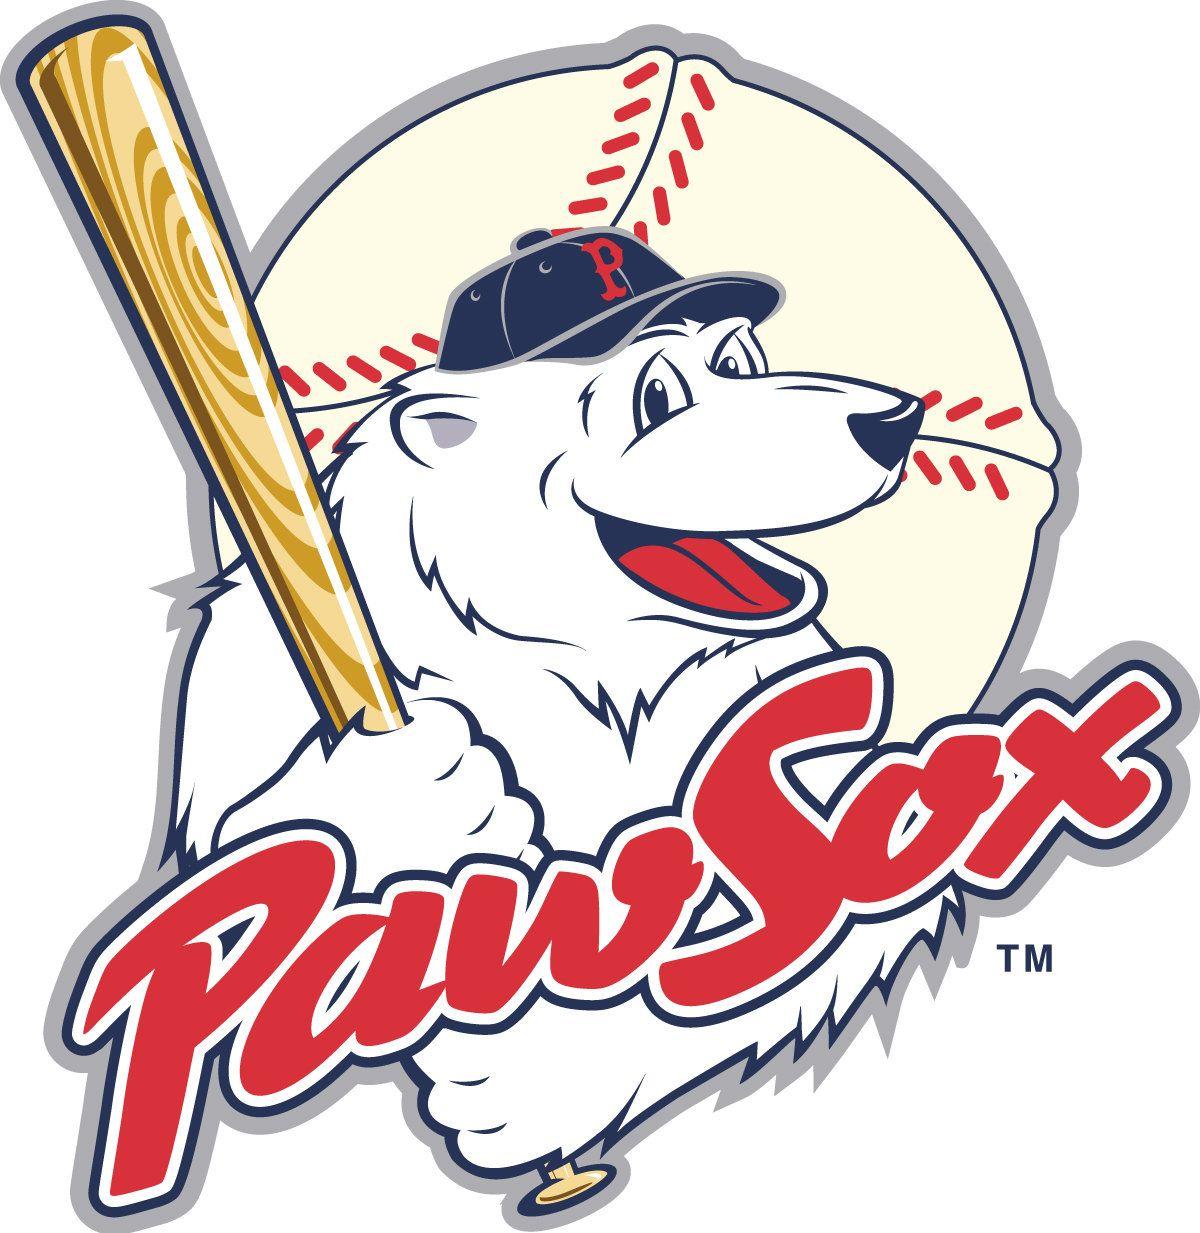 PawSox Logo - A PawSox move to Springfield? You need to talk to the Hartford Yard ...